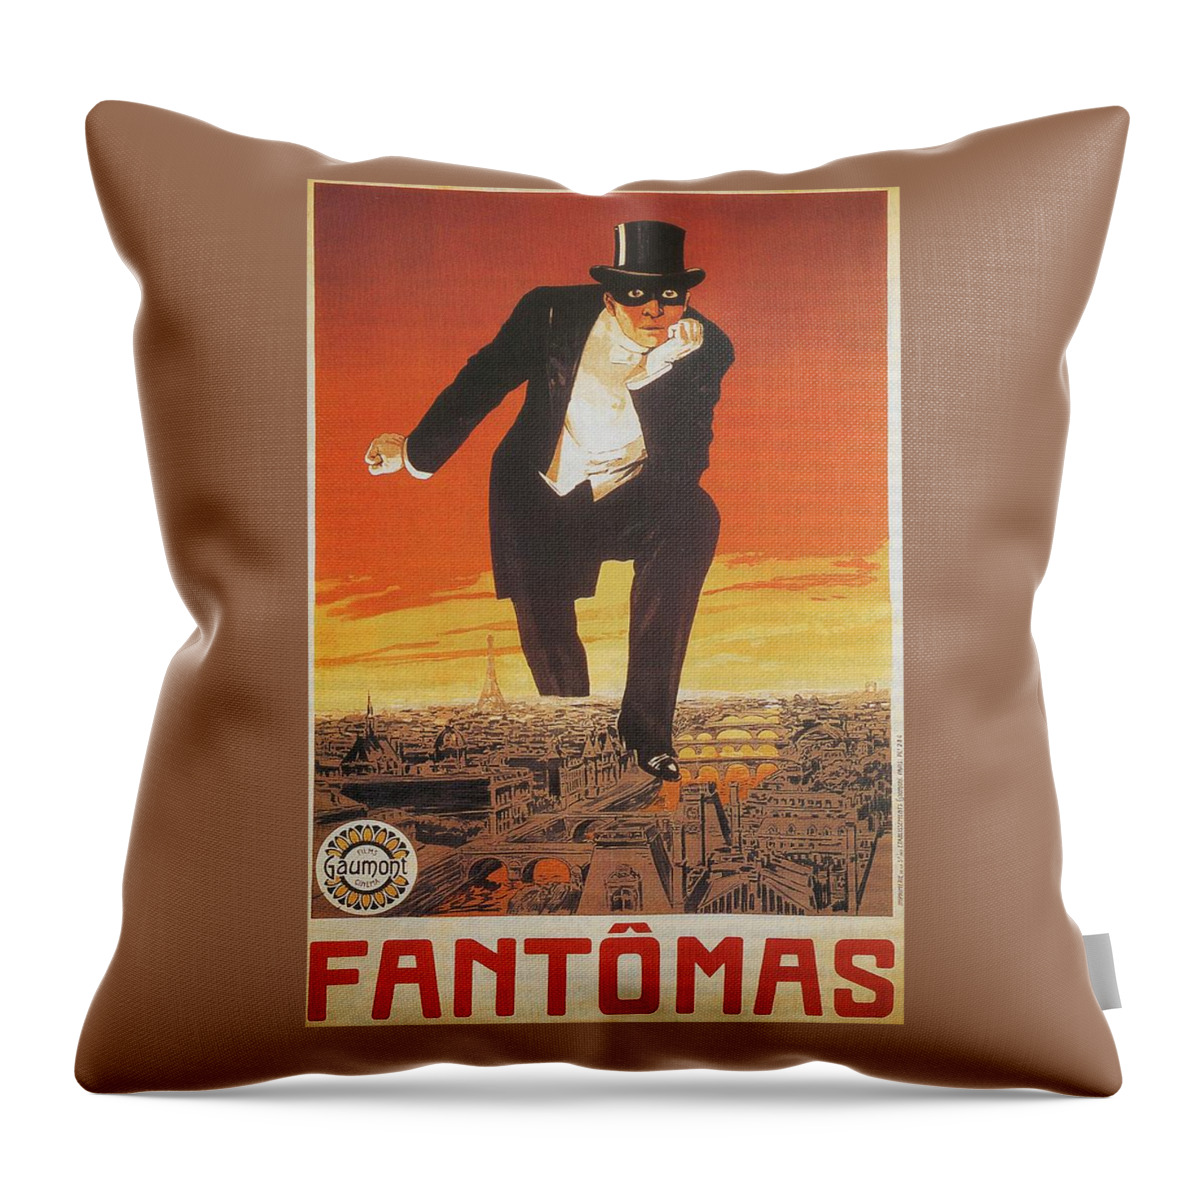 Fantomas Throw Pillow featuring the photograph Fantomas by Gaumont Studios